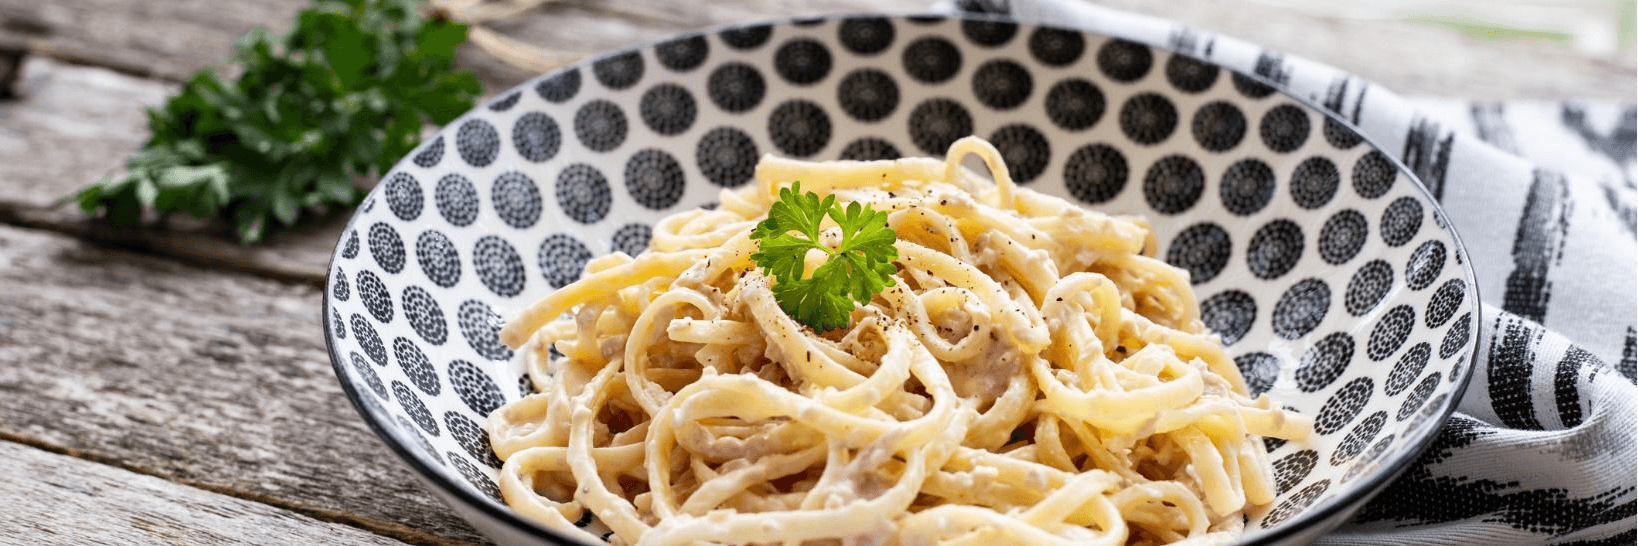 Spaghetti Carbonara mit resource Trinknahrung 